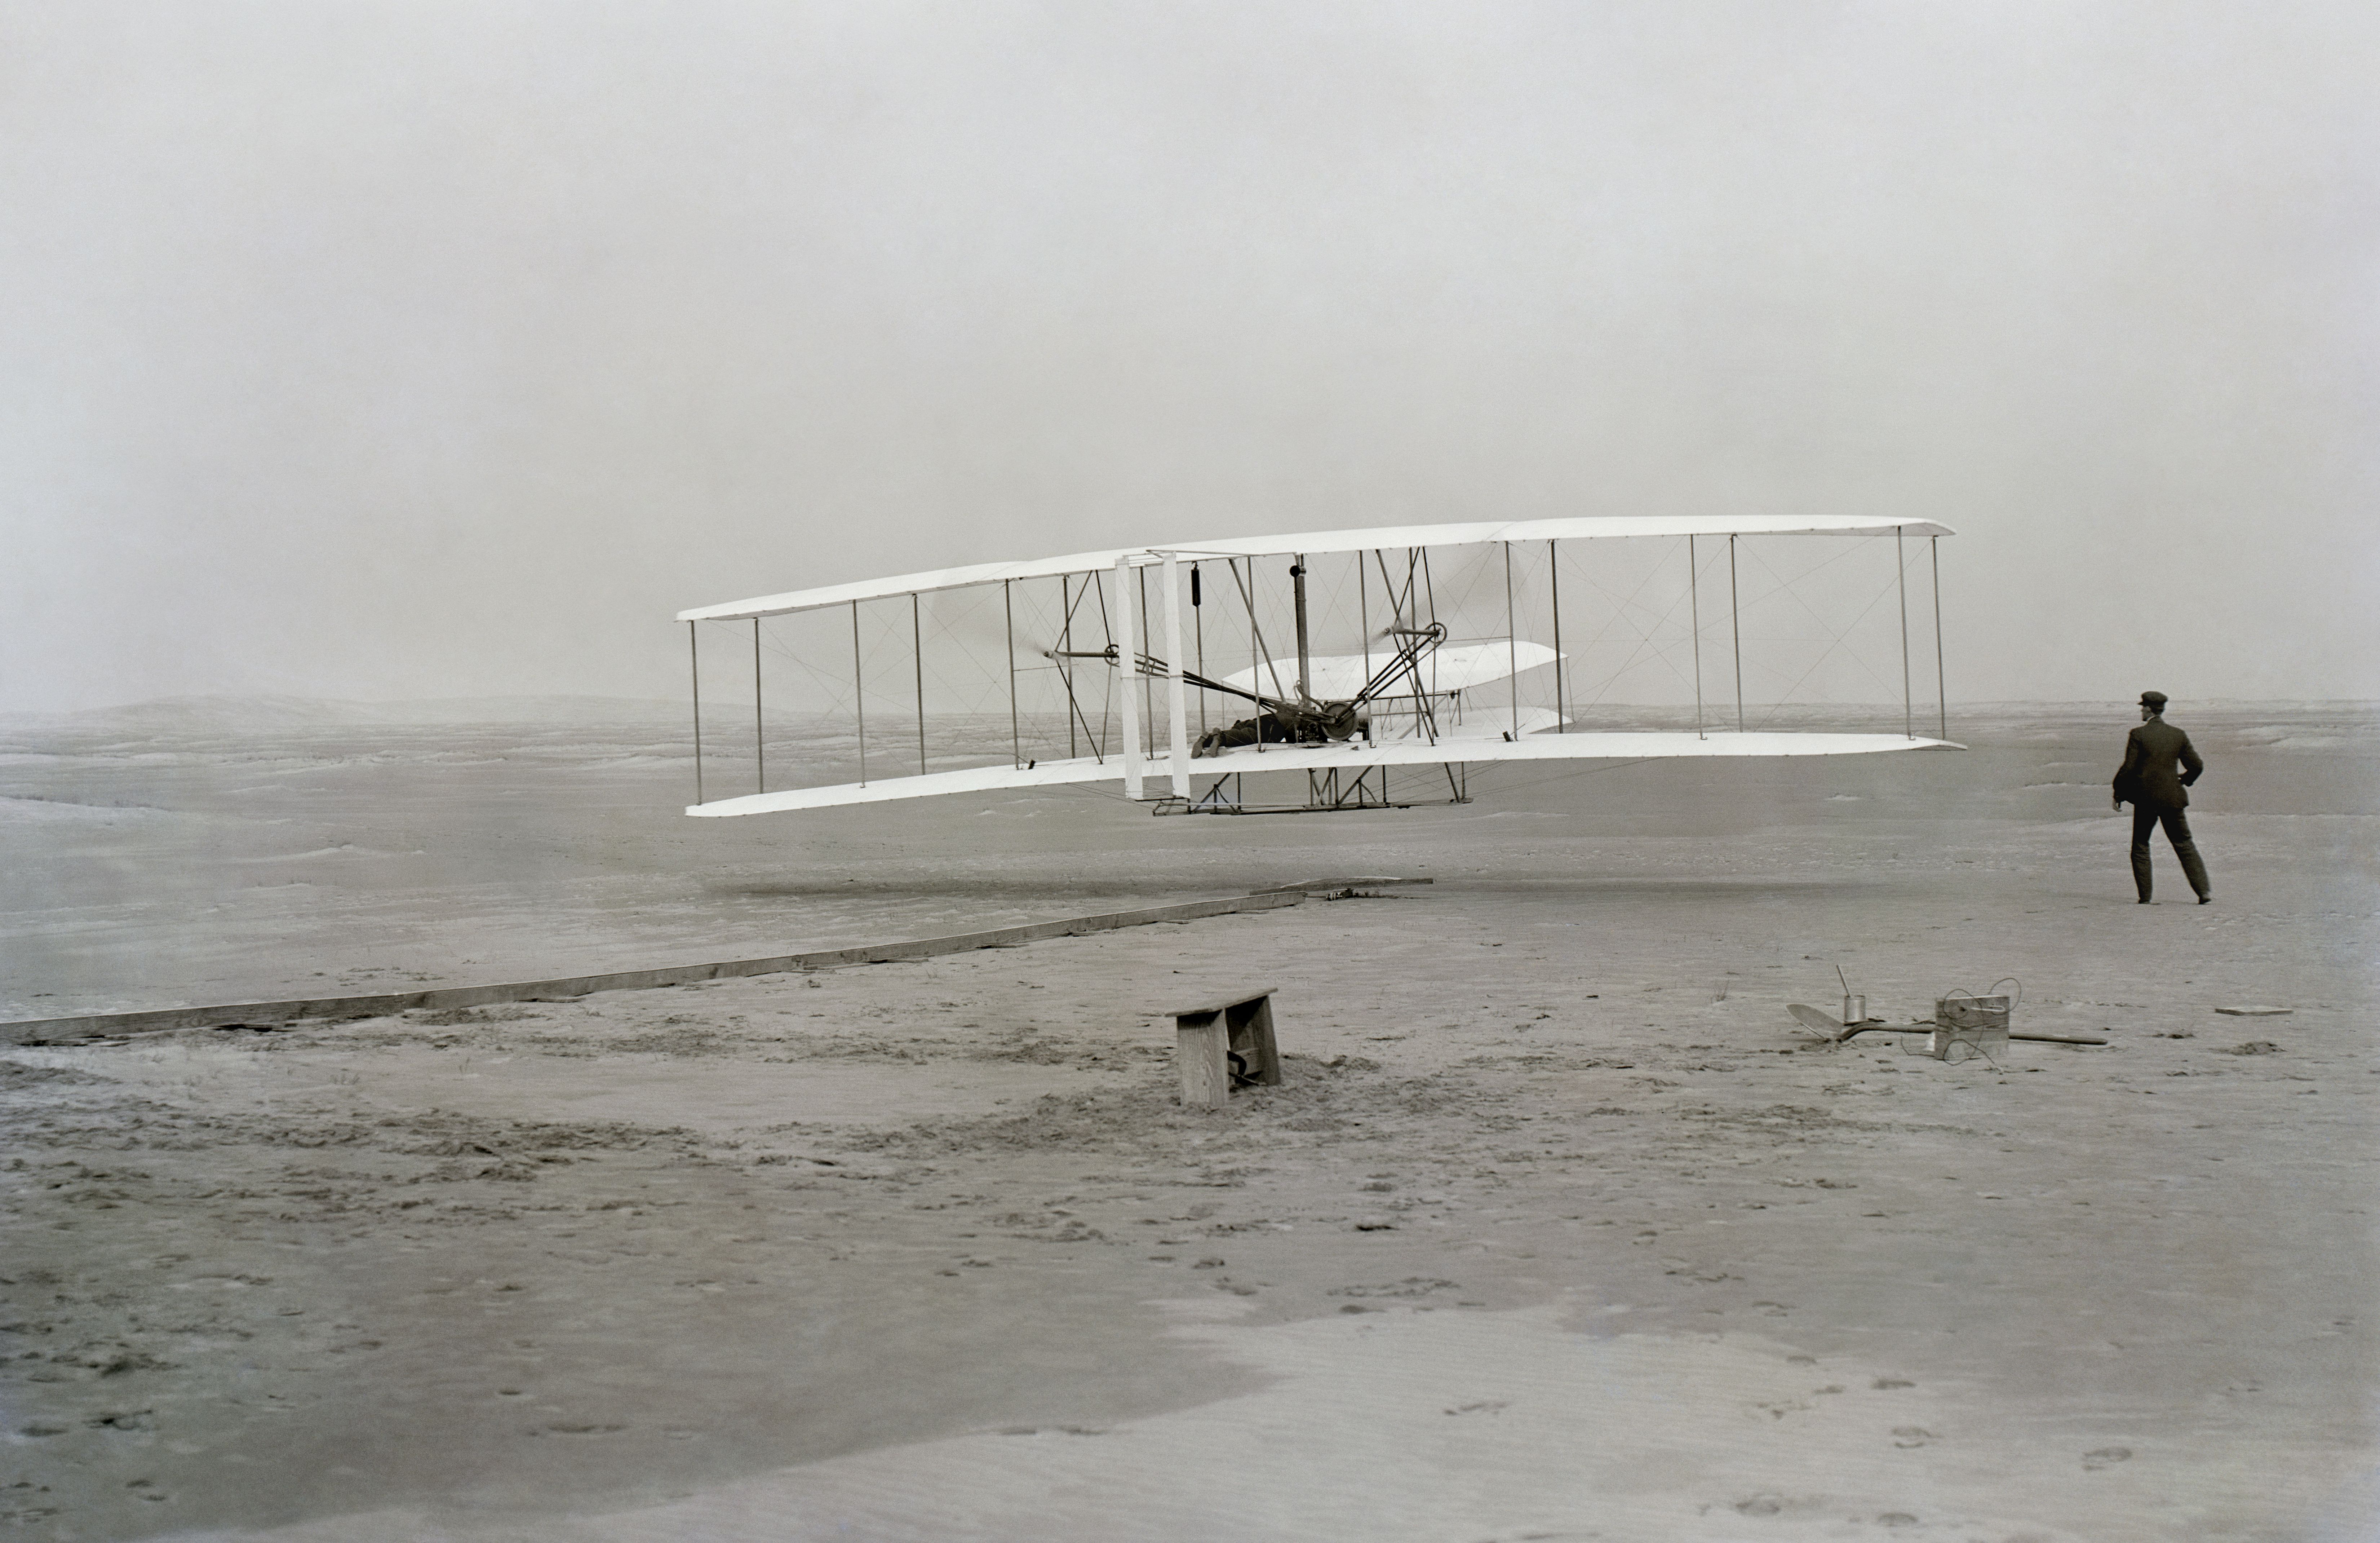 Wright Brothers' first flight in Kitty Hawk, North Carolina